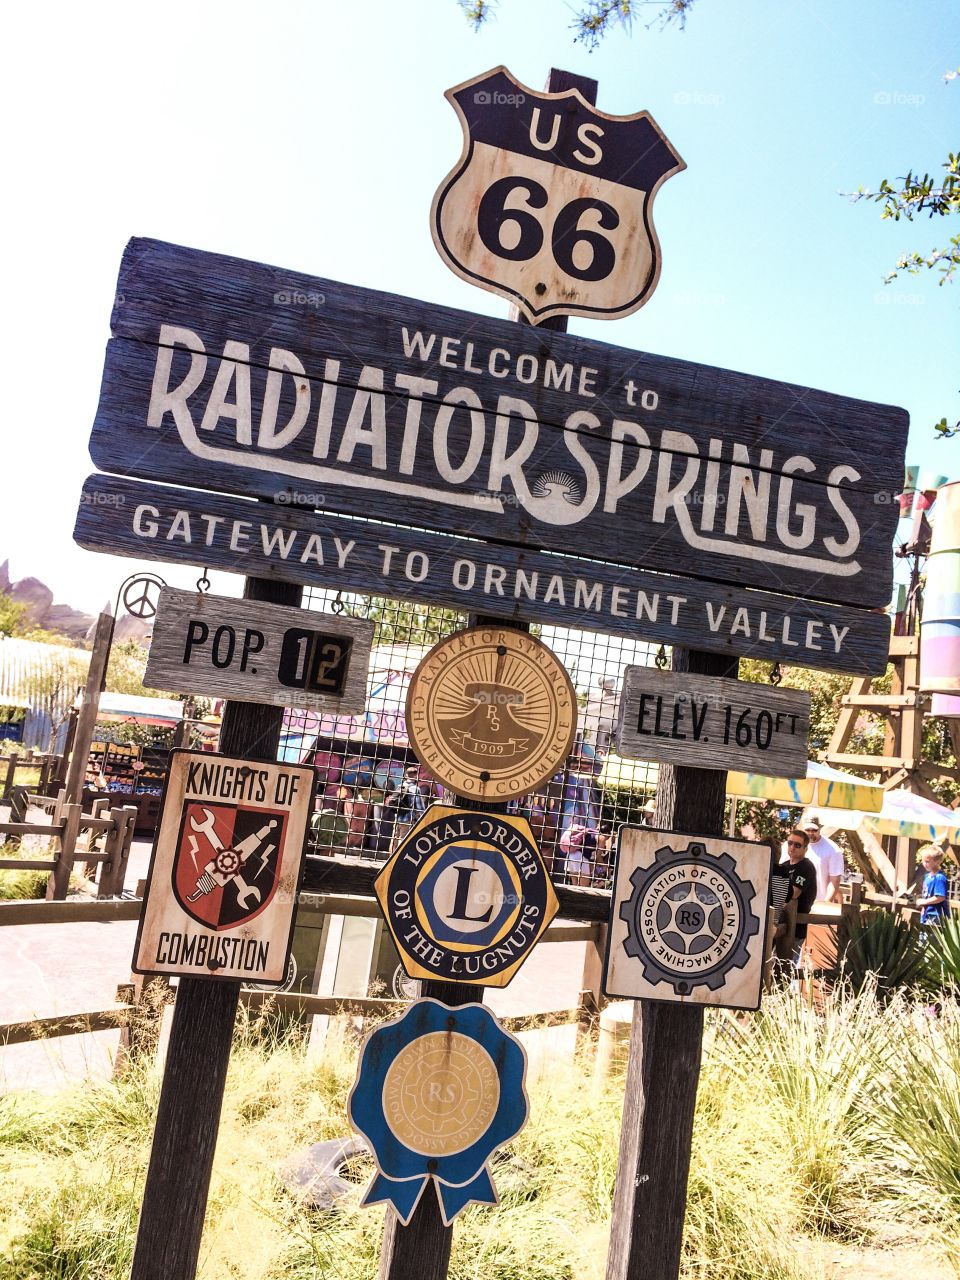 Welcome to Radiator Springs, Cars Land at Disney's California Adventure in Anaheim California. YeHaa!